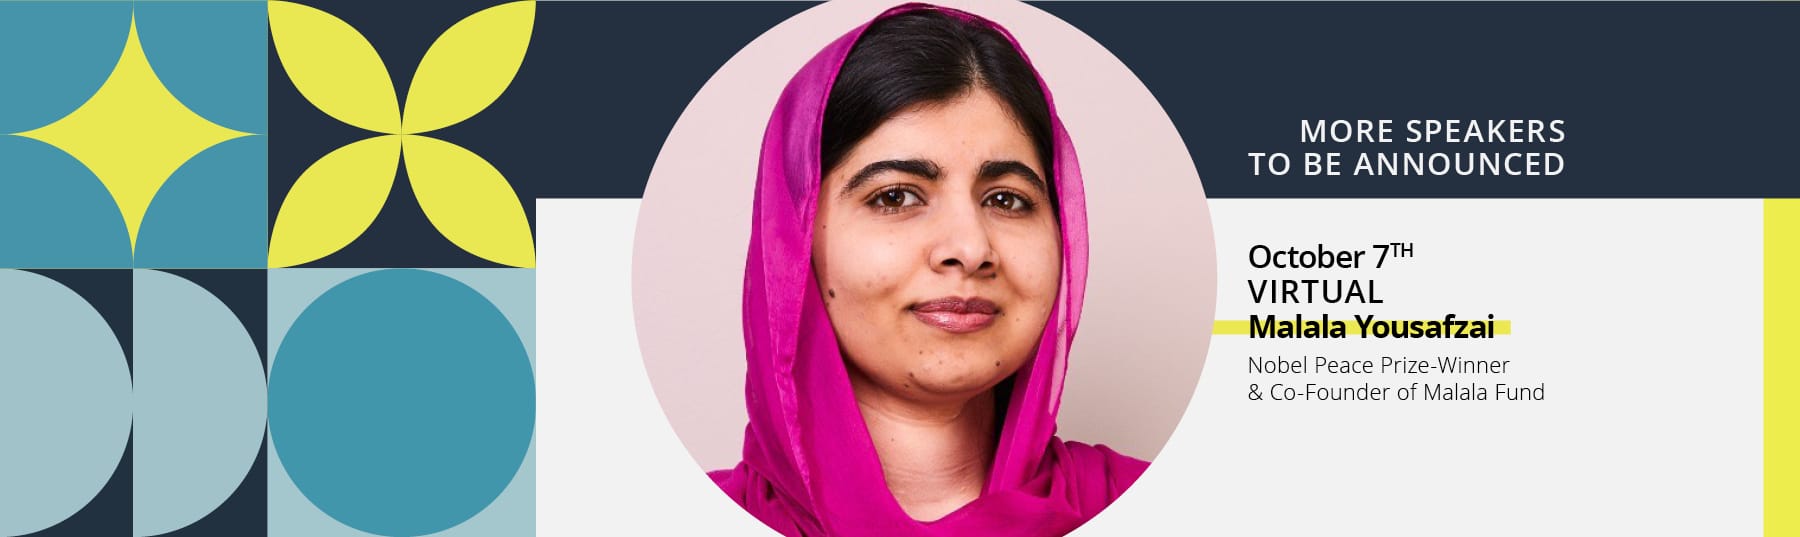 See 2022 virtual keynote speaker Malala Yousafzai on October 7th